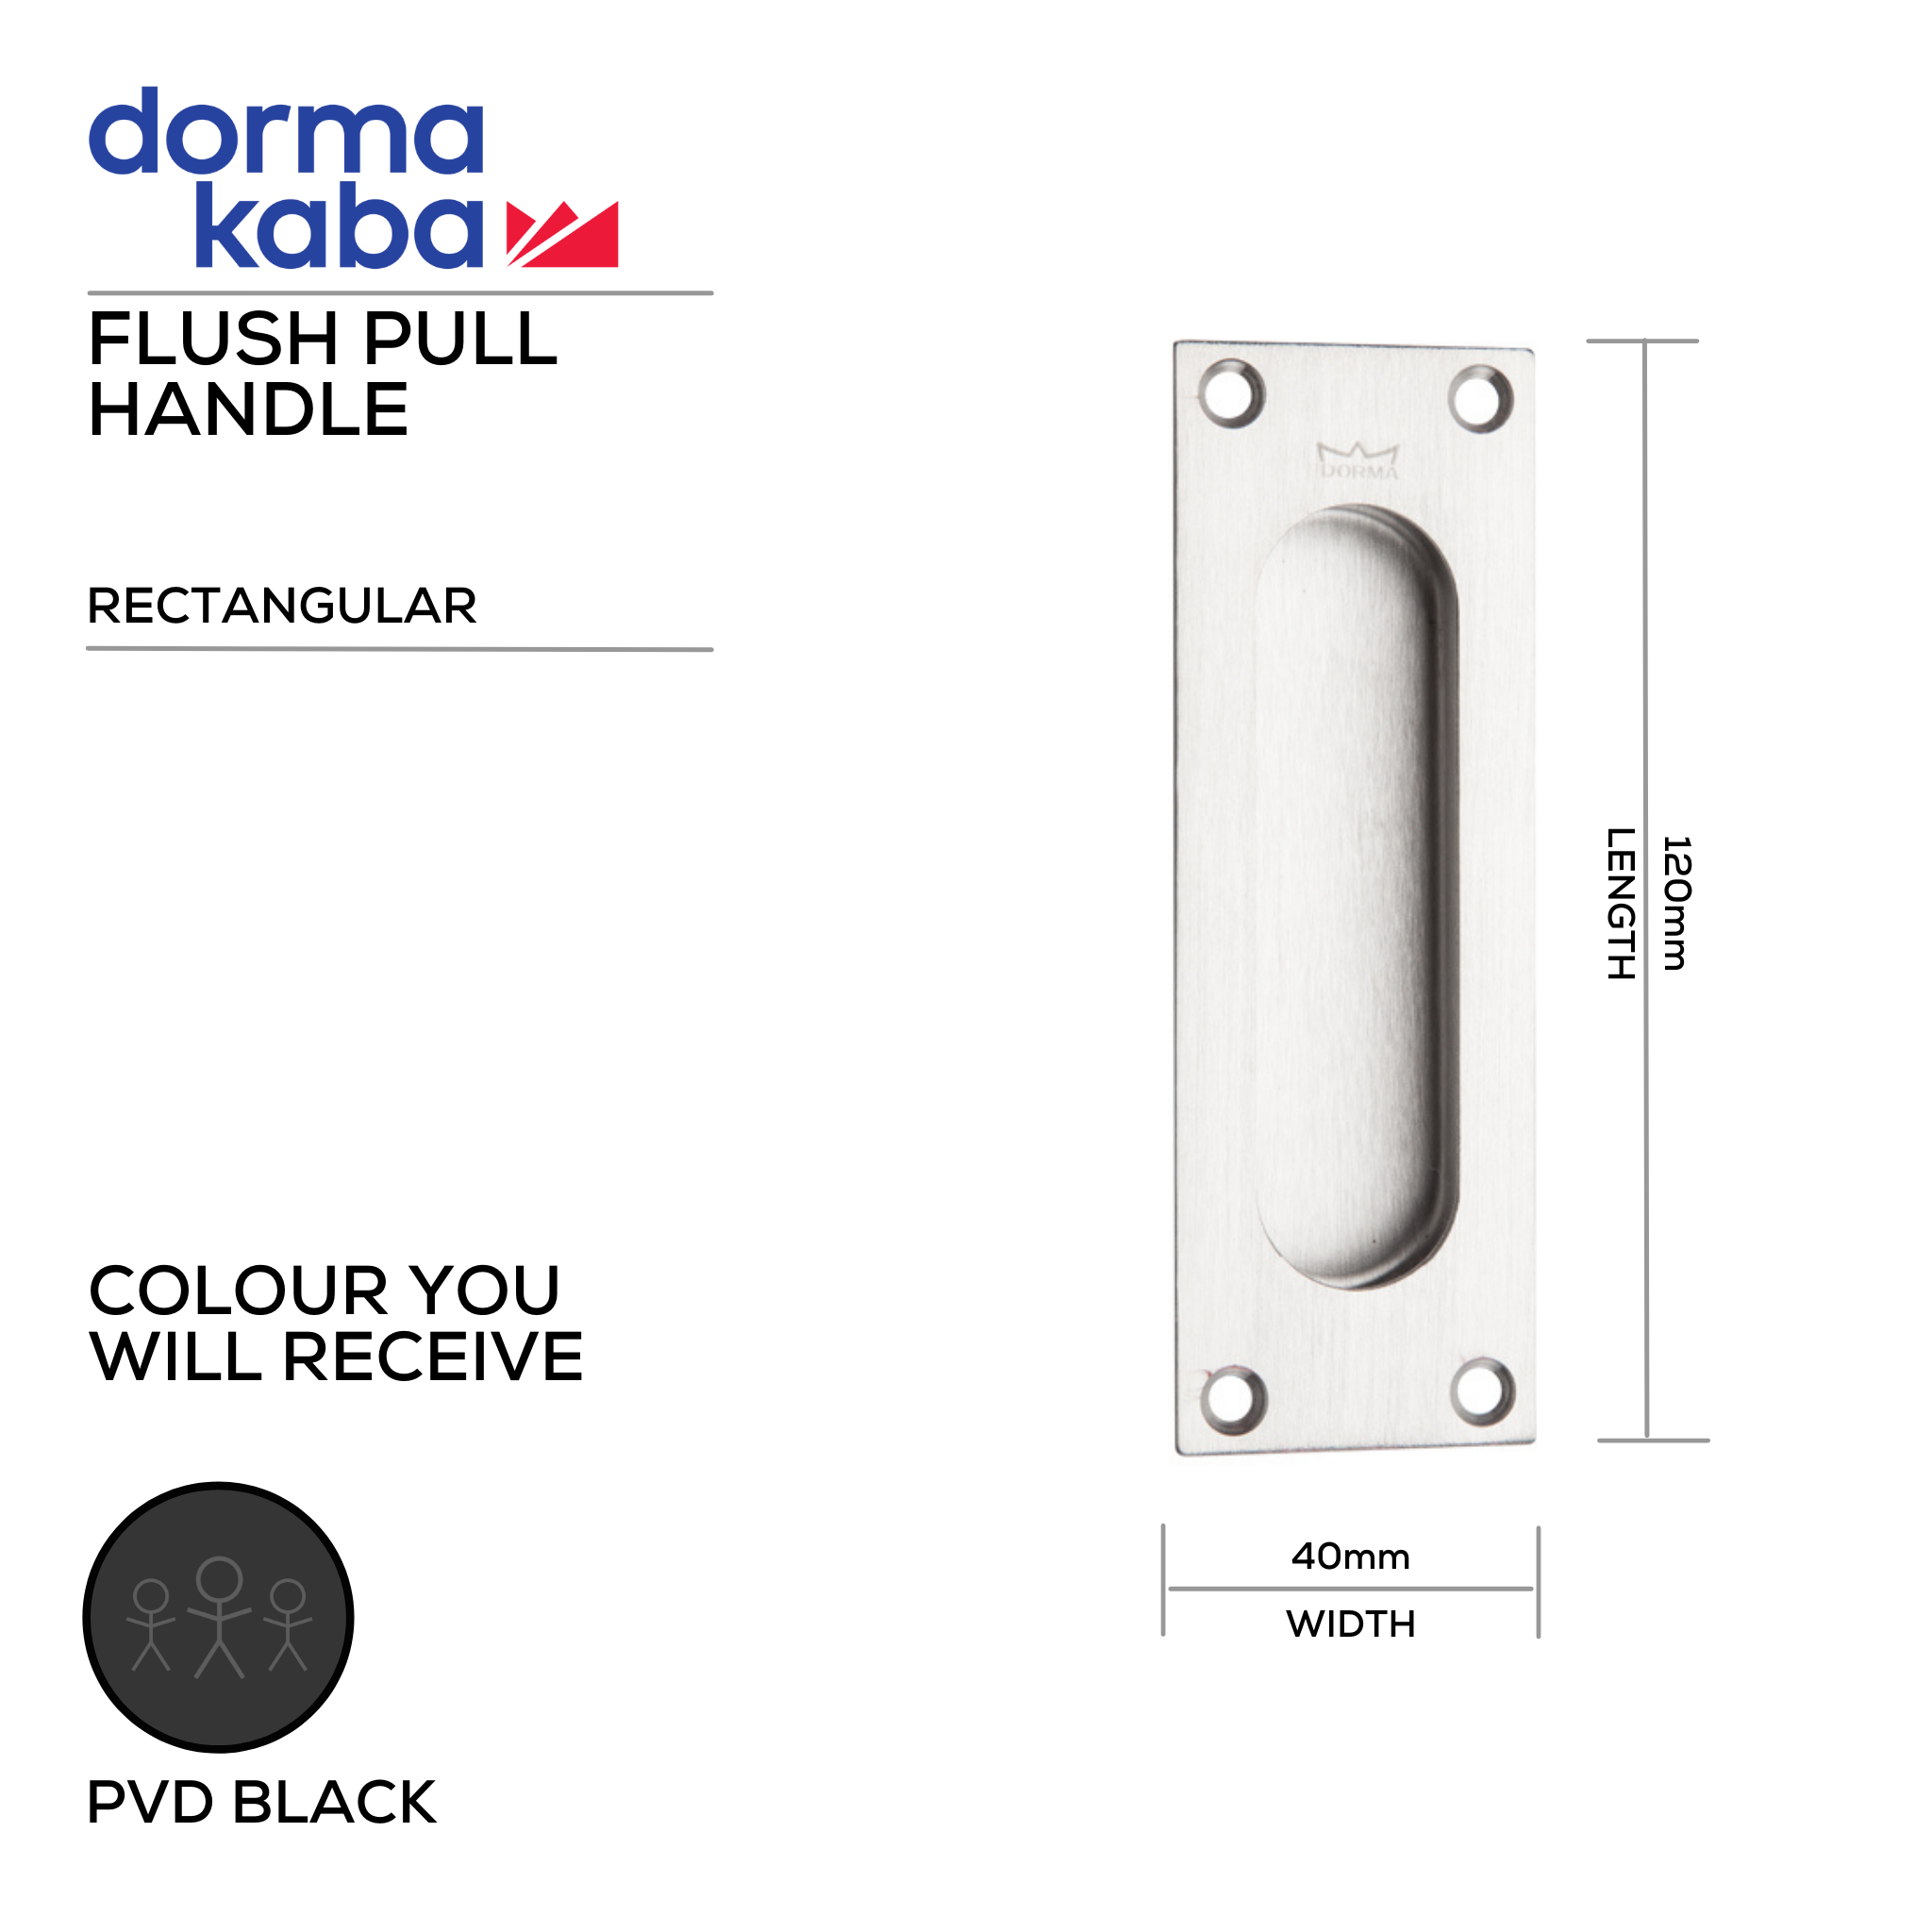 DFP-PVD-025 PVD Black, Pull Handle, Recessed, Flush, Rectangular, 120mm (l) x 44mm (w), PVD Black, DORMAKABA